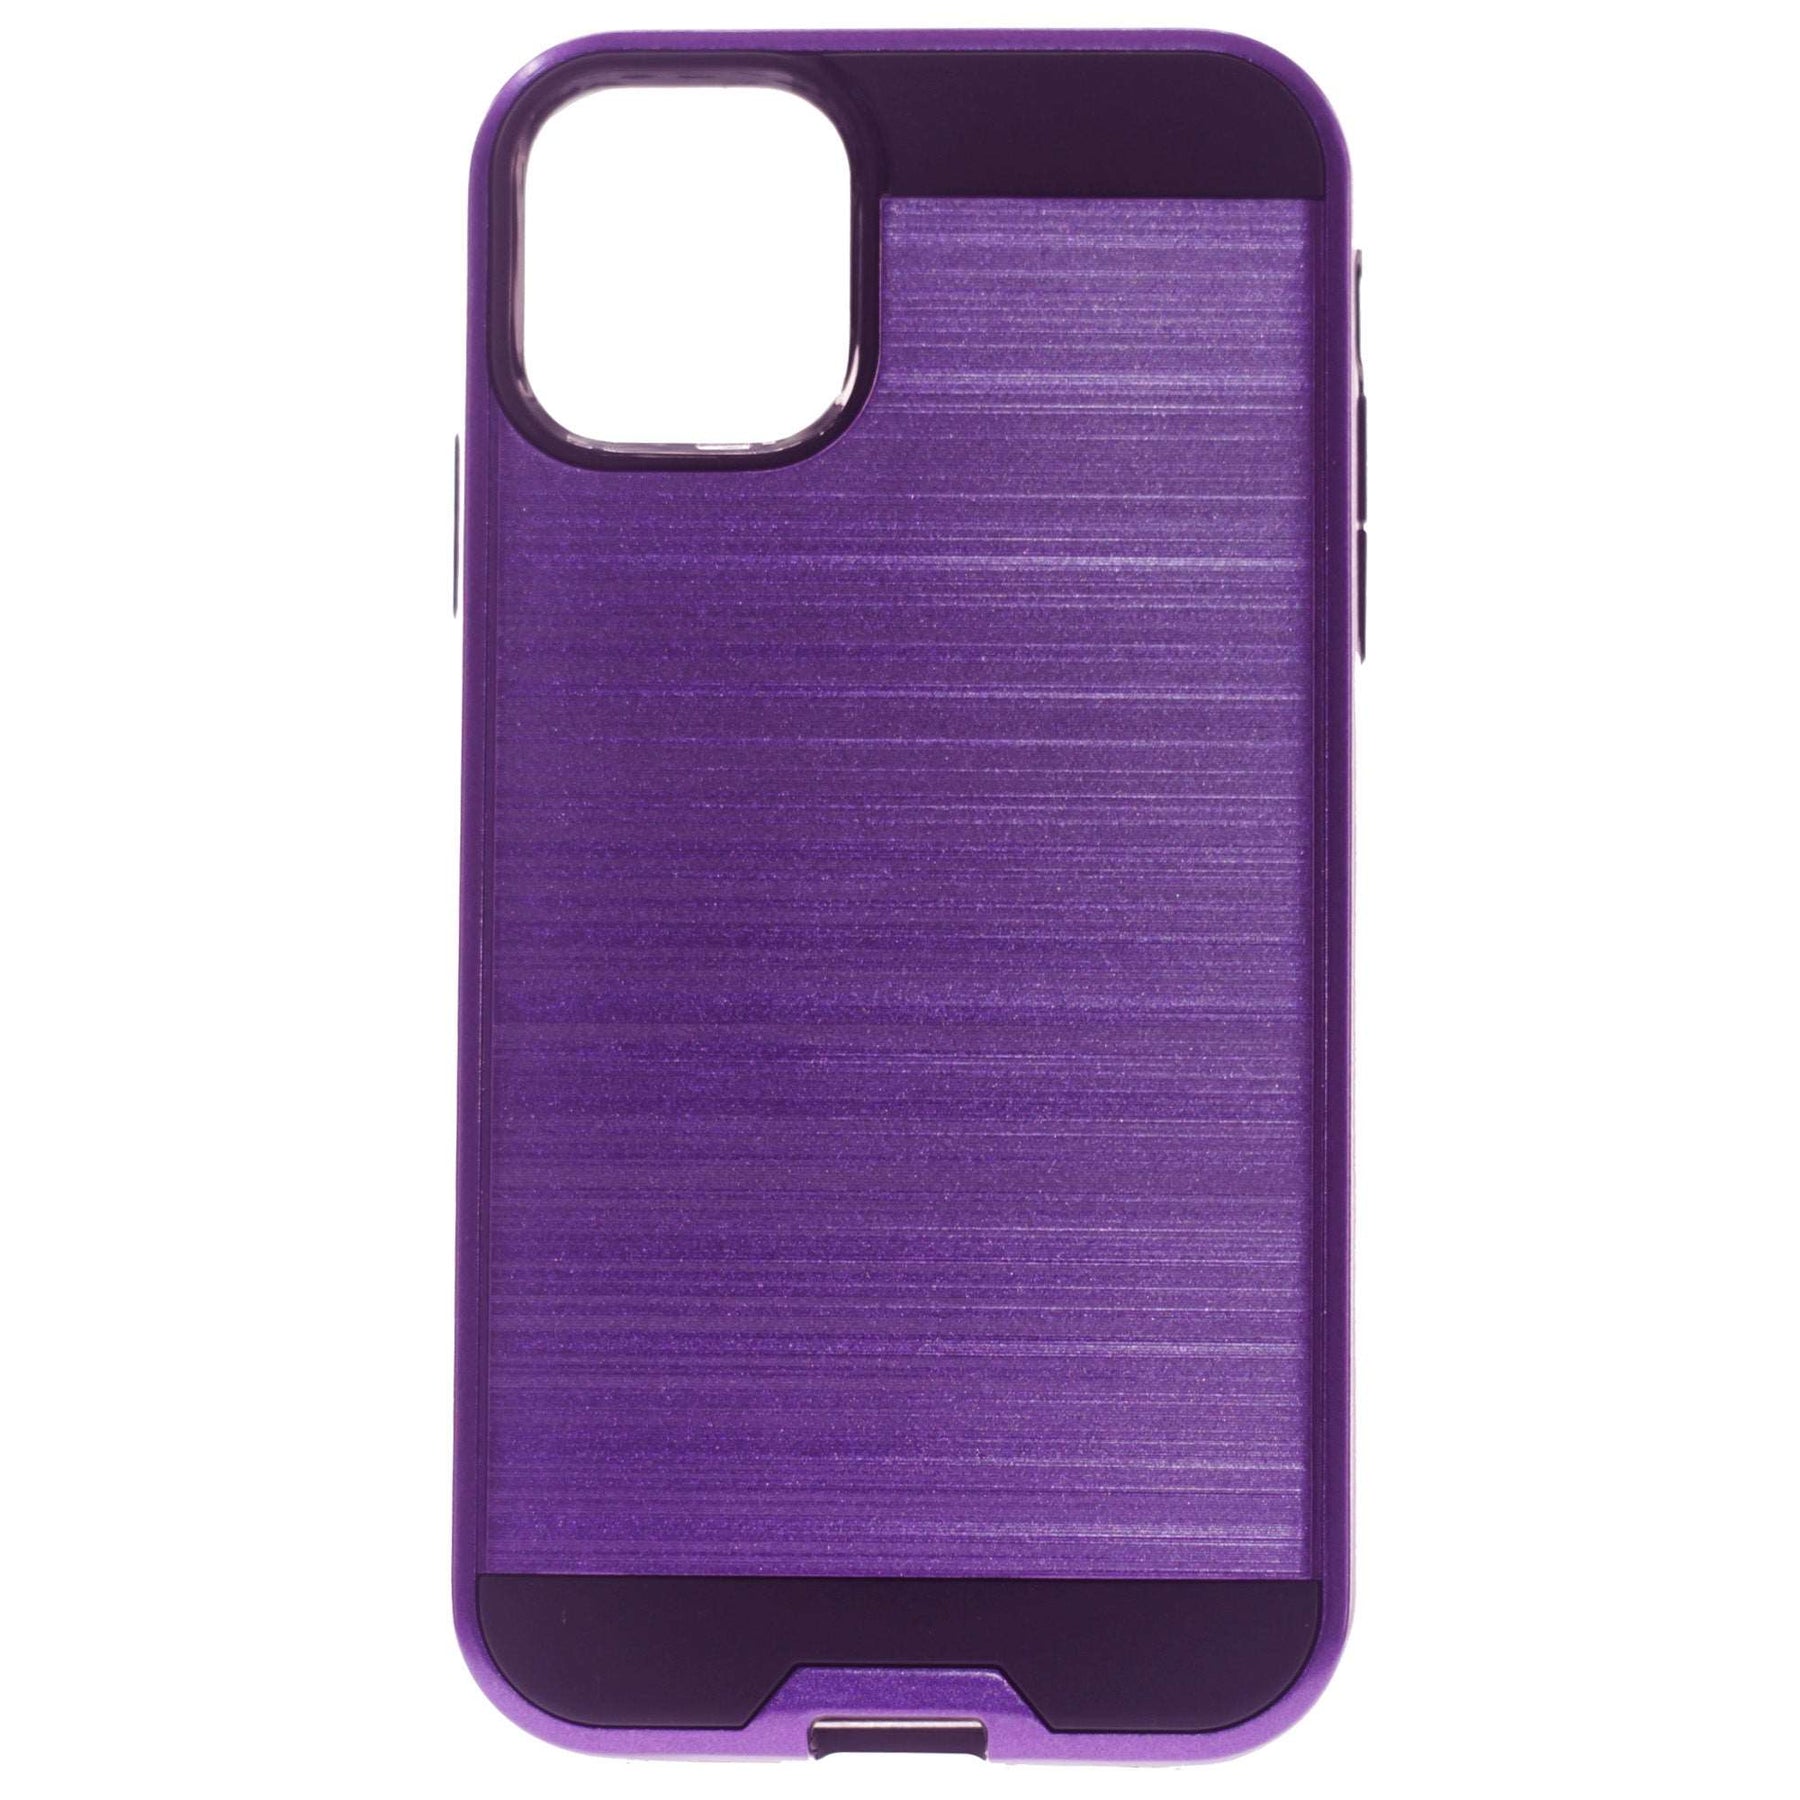 Apple iPhone 12 Pro Max, Slim Armor Case, Color Purple